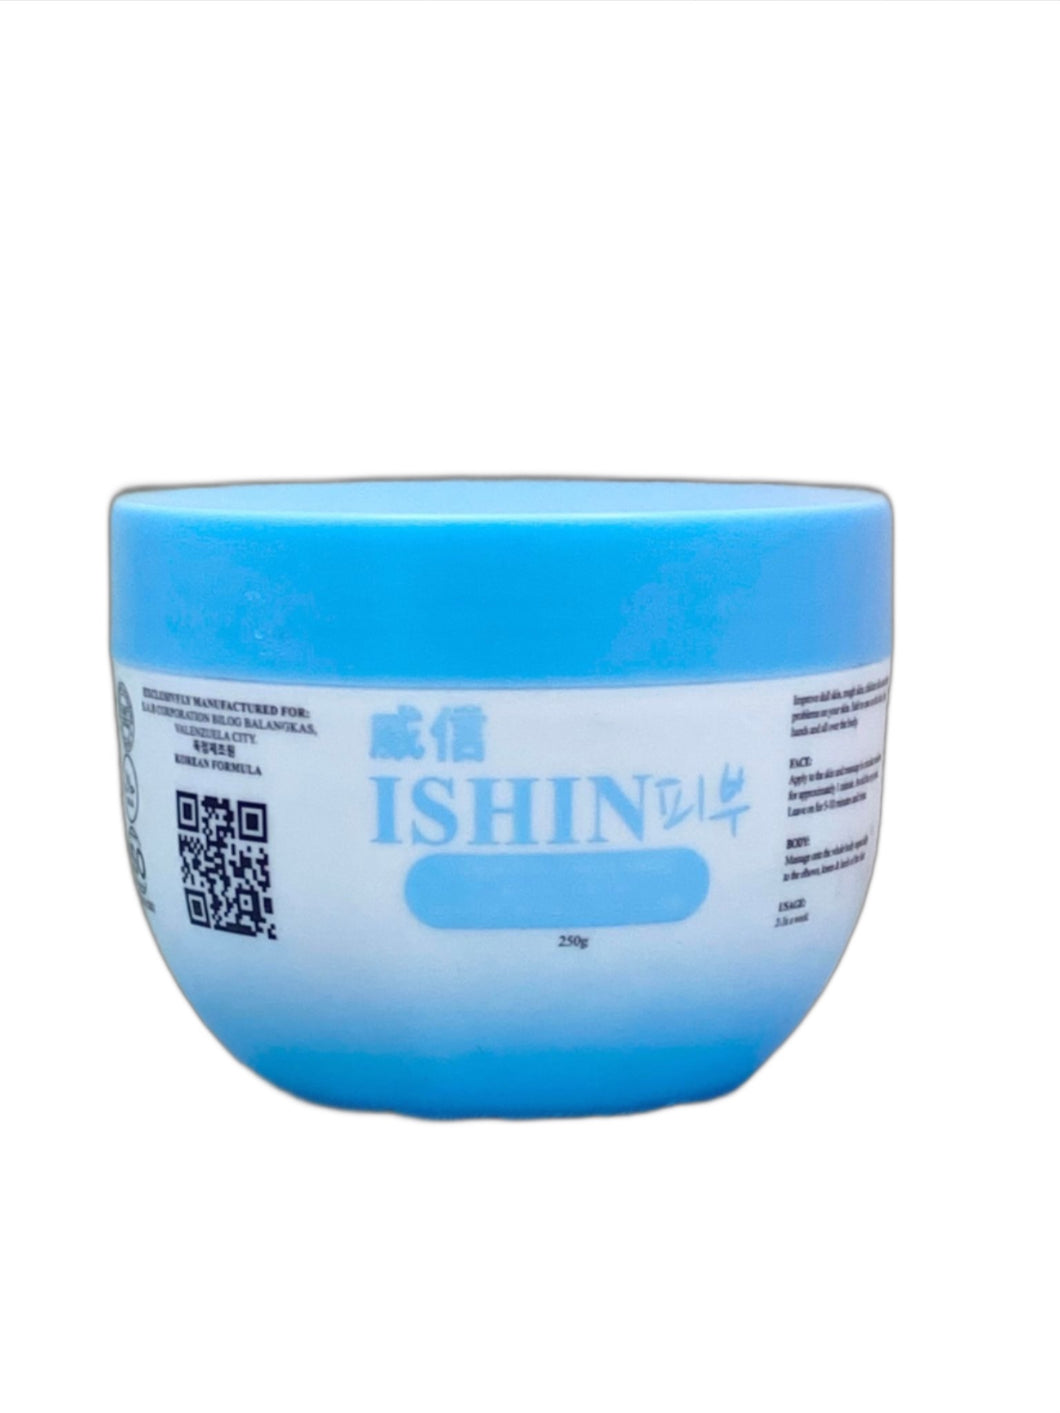 ISHIN Premium Whitening Body Scrub 250g